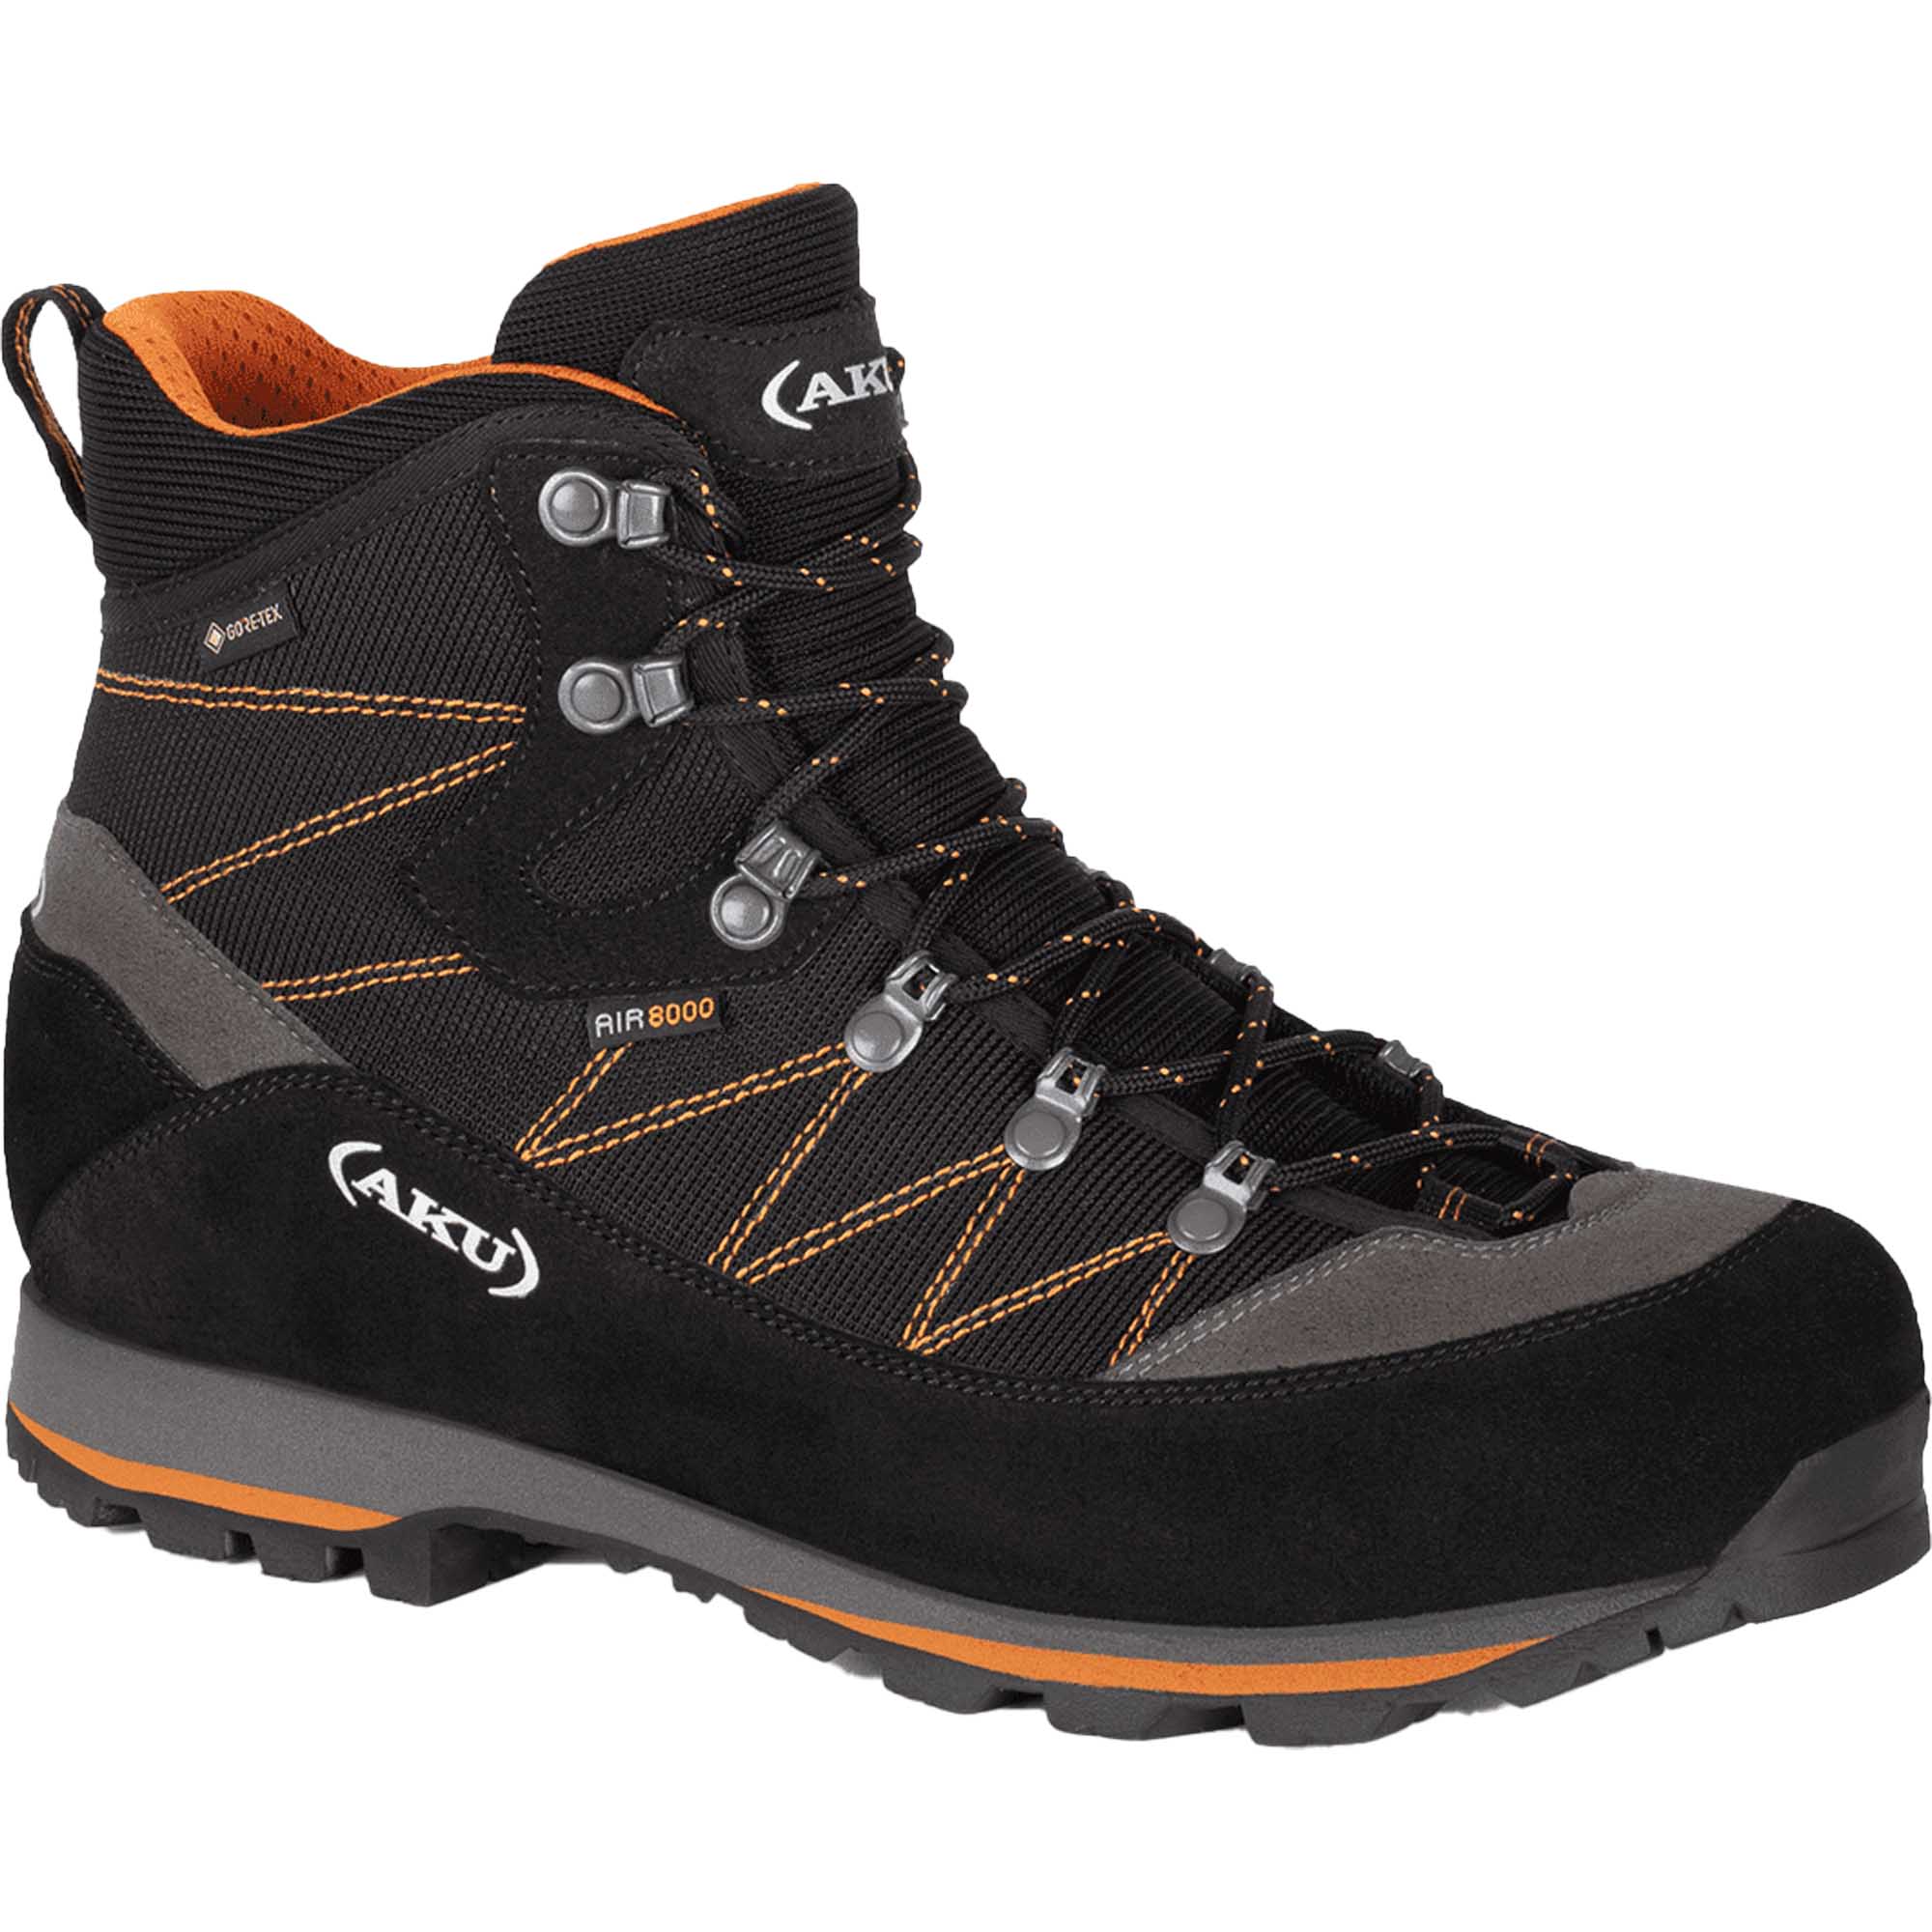 Aku Trekker Lite III GTX Wide Hiking Boots